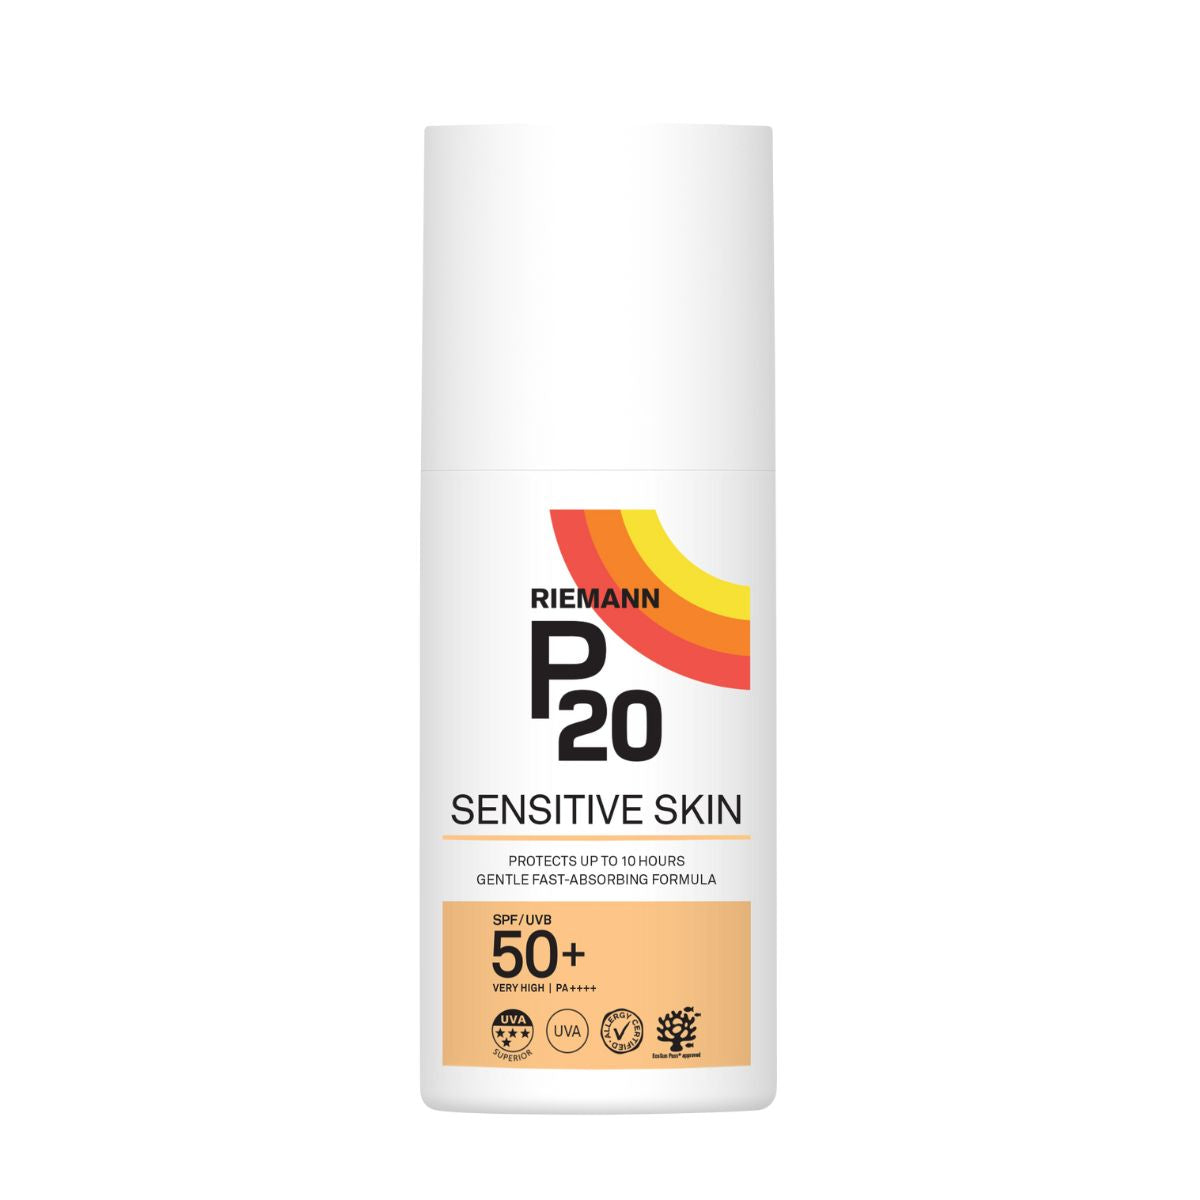 P20 Sun Protection SPF 50+ Sensitive Cream 200ml